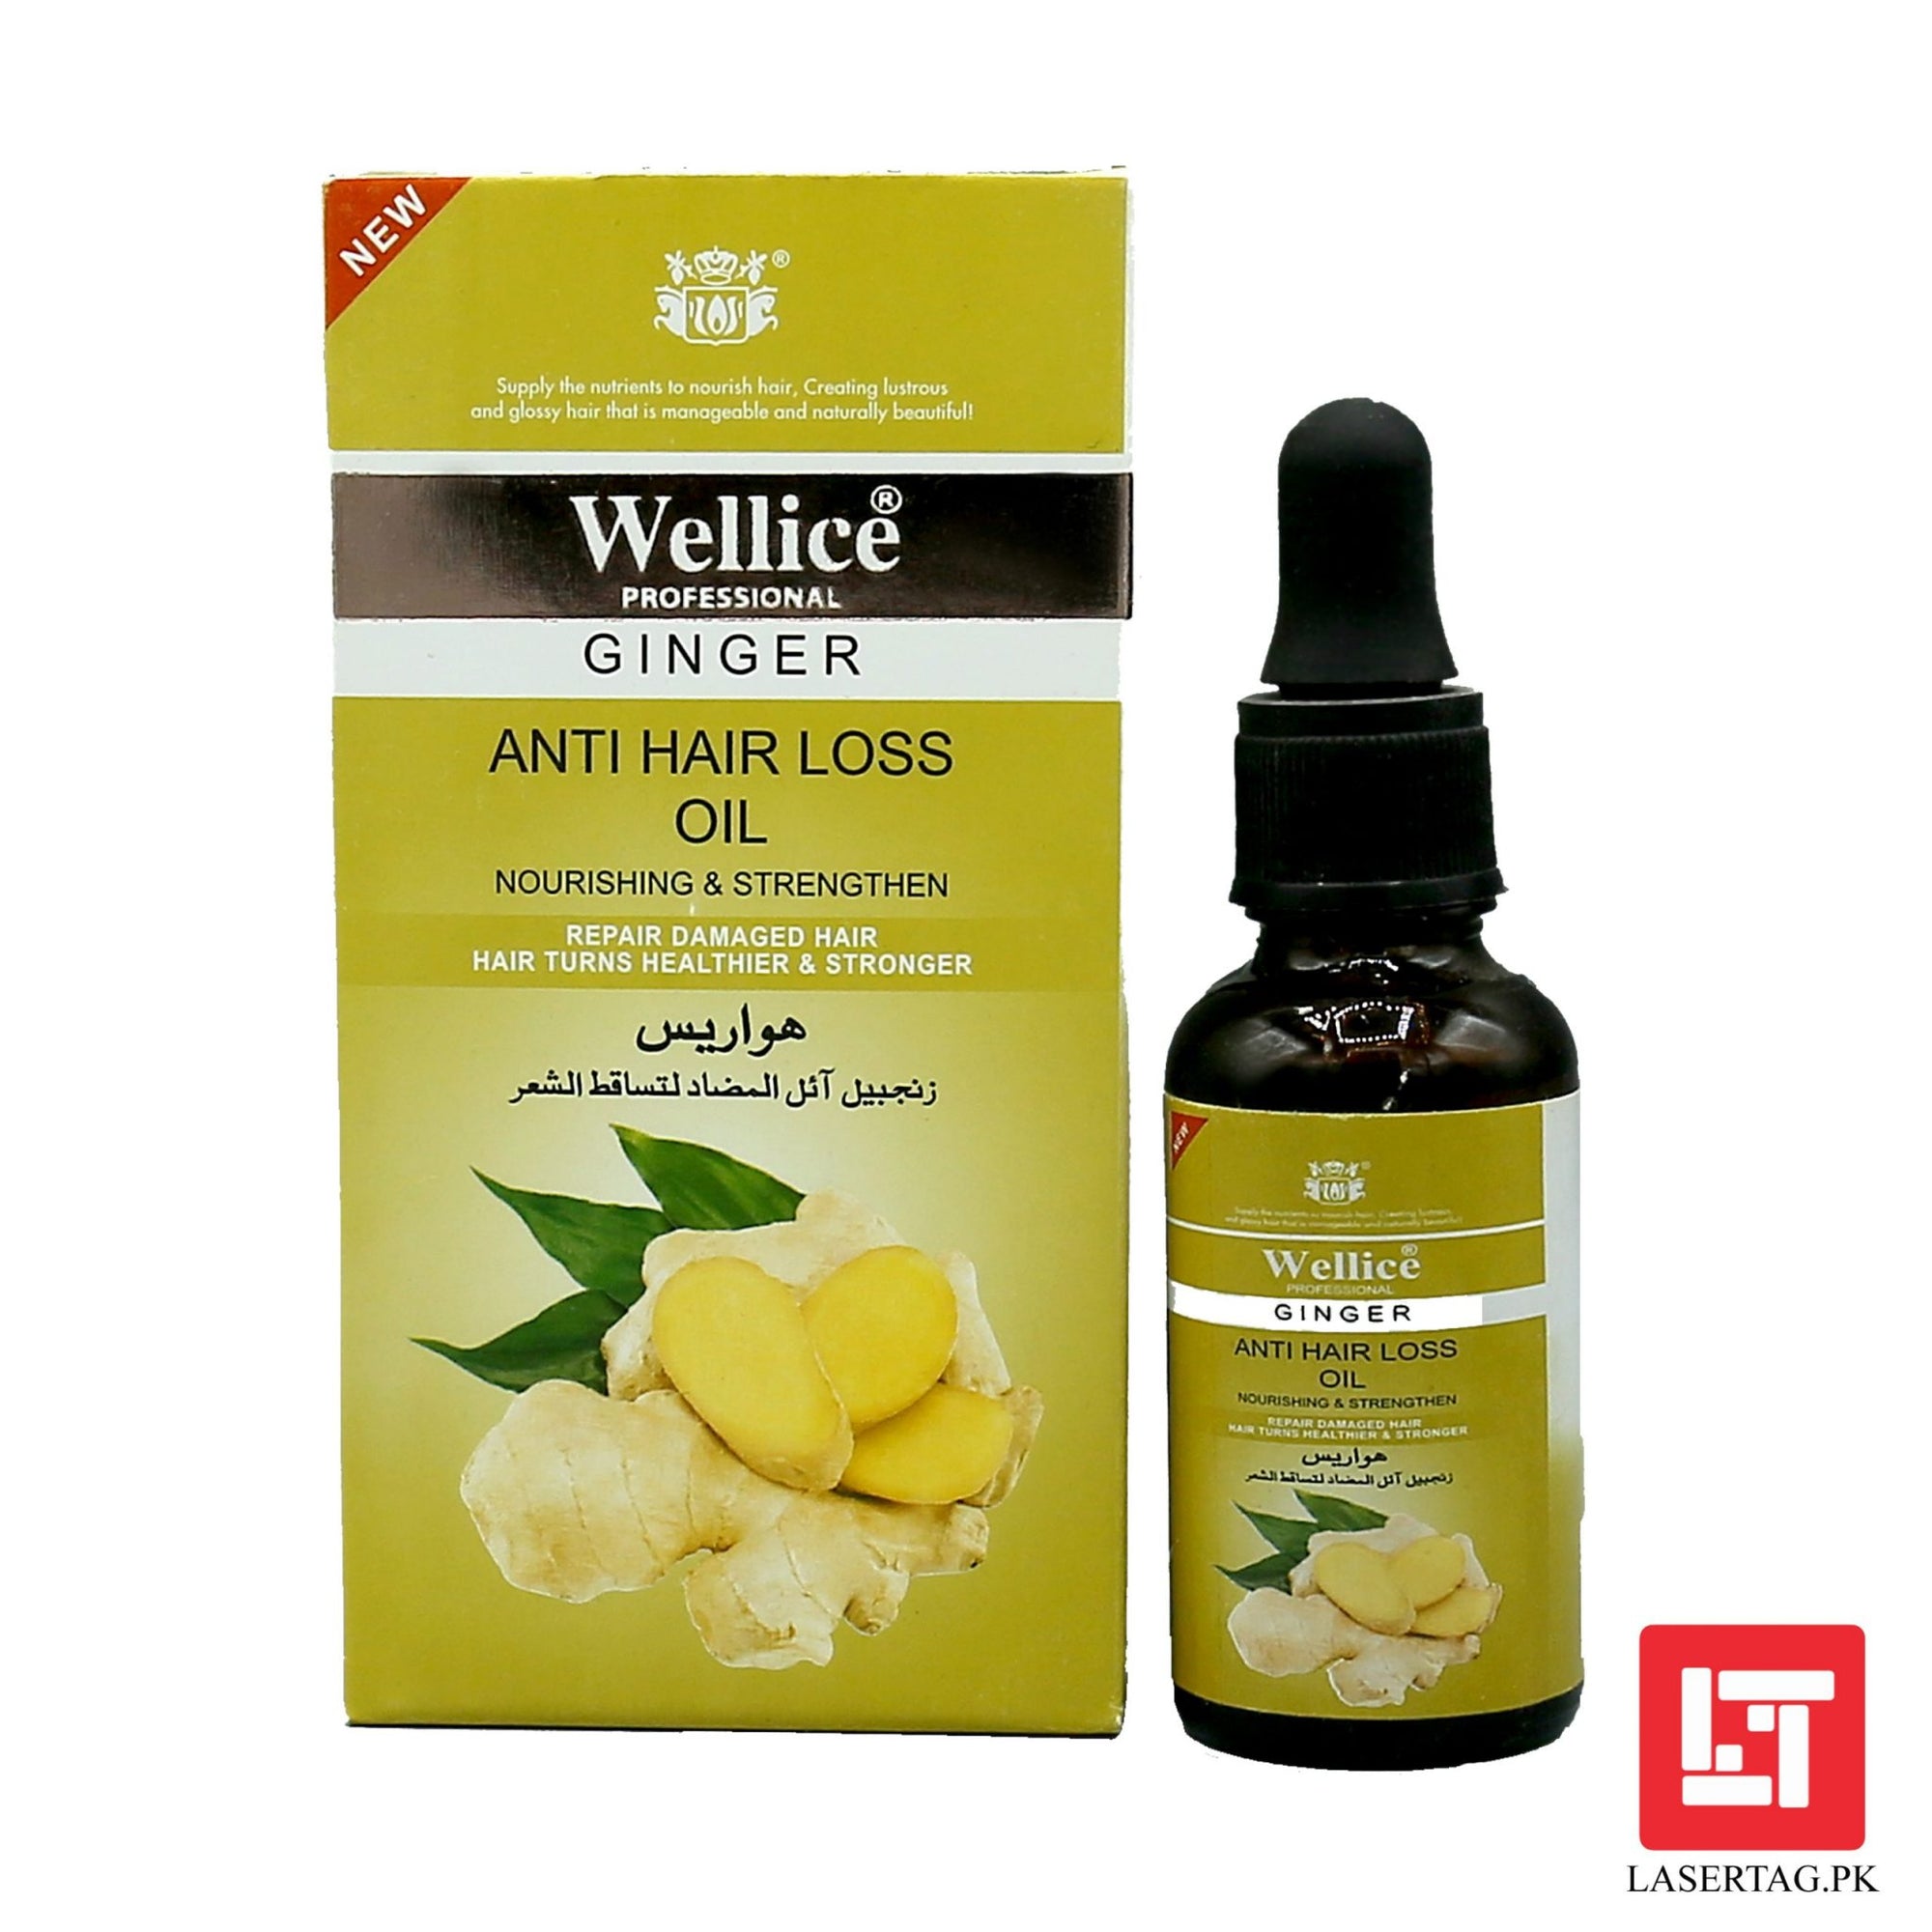 Wellice Ginger Anti Hair Loss Oil Repair Damage Hair Ginger Oil 30ml freeshipping - lasertag.pk